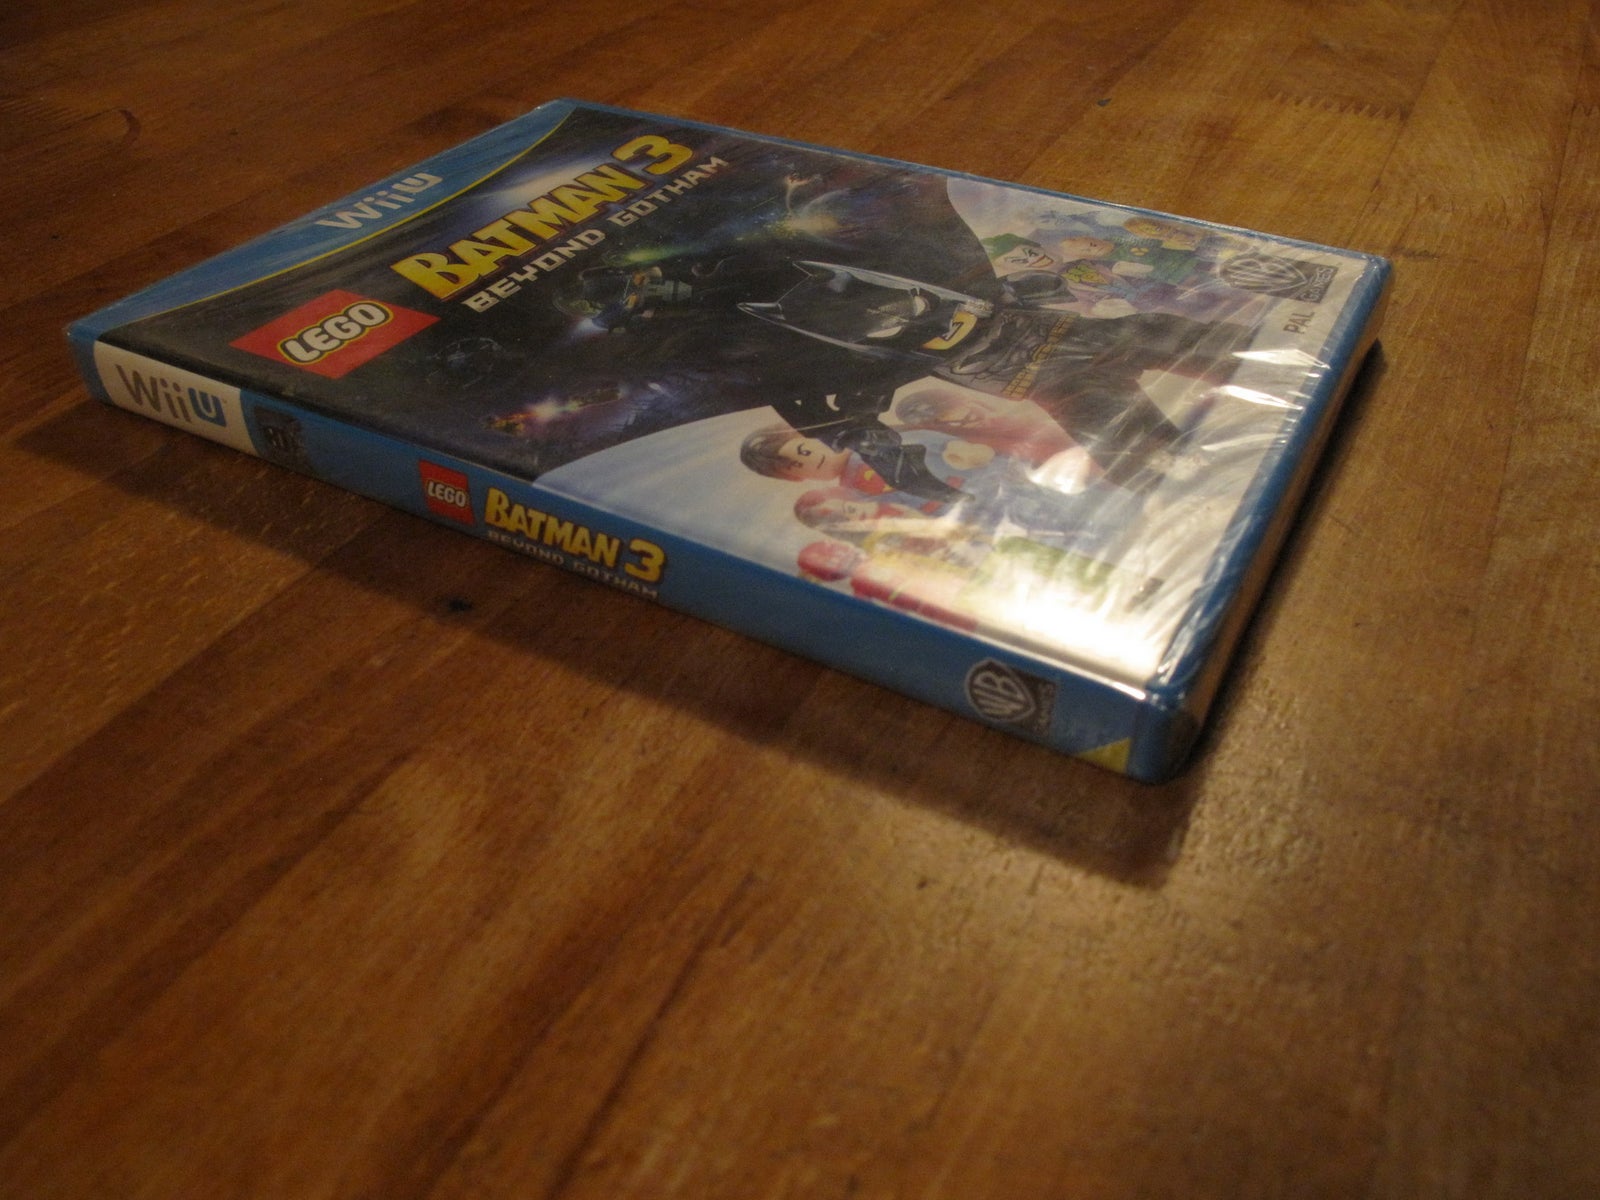 Batman 3 Beyond Gotham (forseglet), Nintendo Wii U,